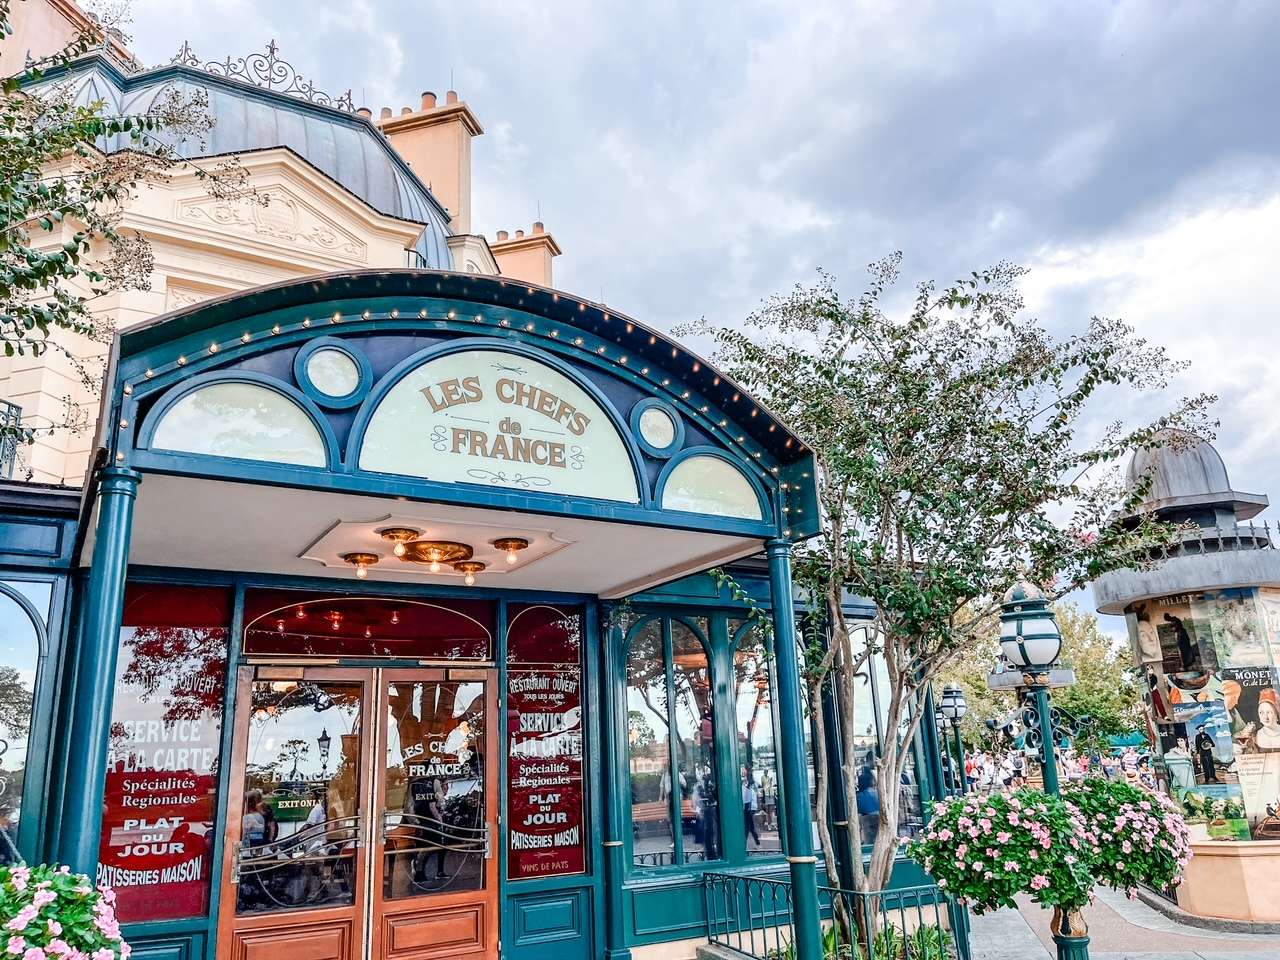 Is Chefs De France Restaurant At EPCOT Disney World Good?